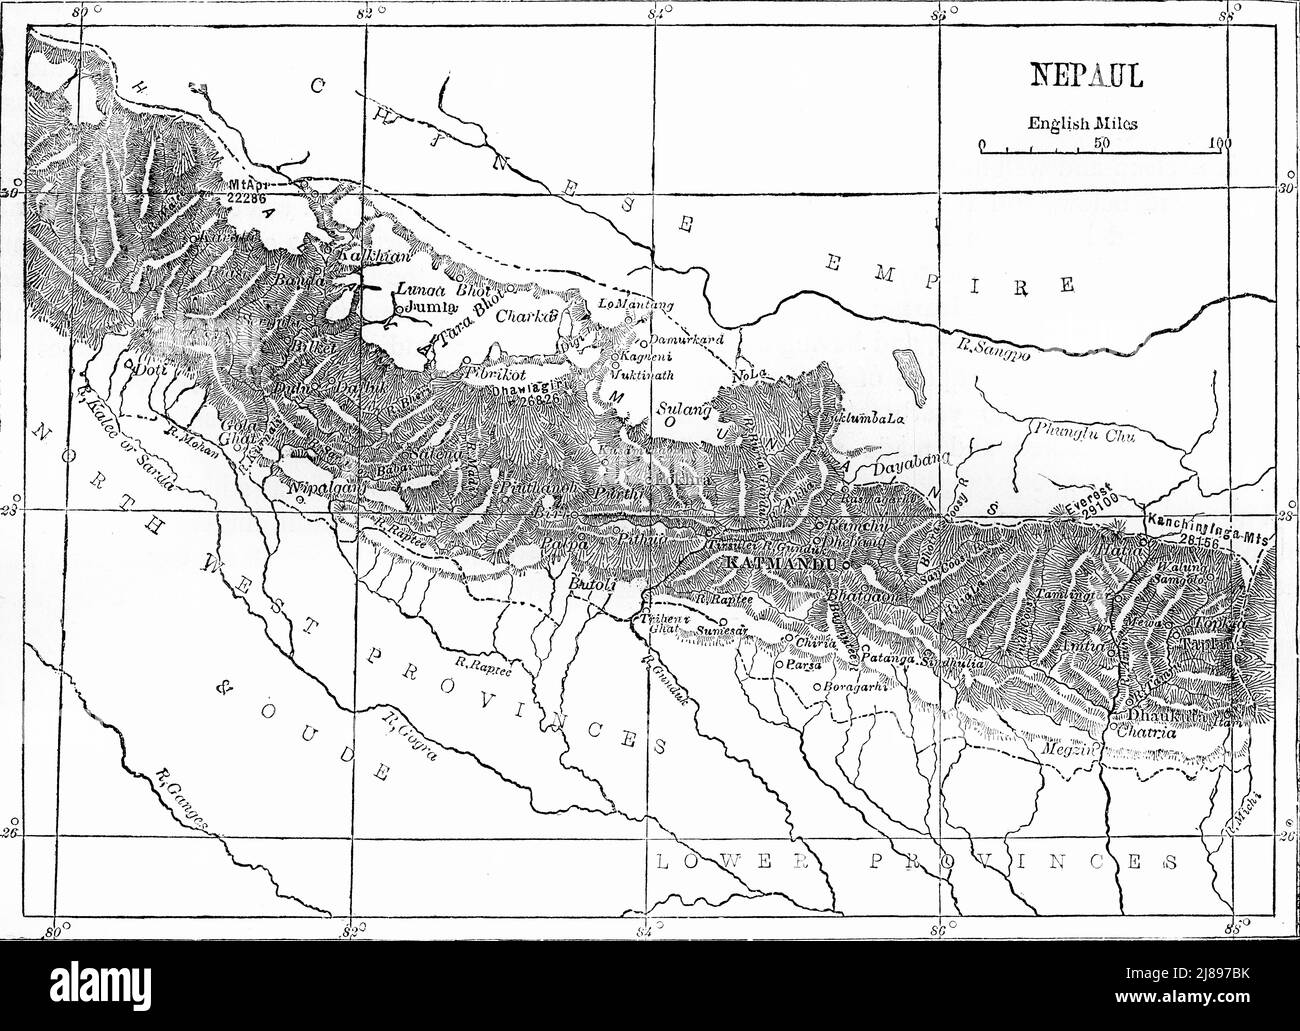 'Karte von Nepaul', c1891. Aus "Cassell's Illustrated History of India Vol. I.", von James Grant. [Cassell Petter &amp; Galpin, London, Paris und New York] Stockfoto